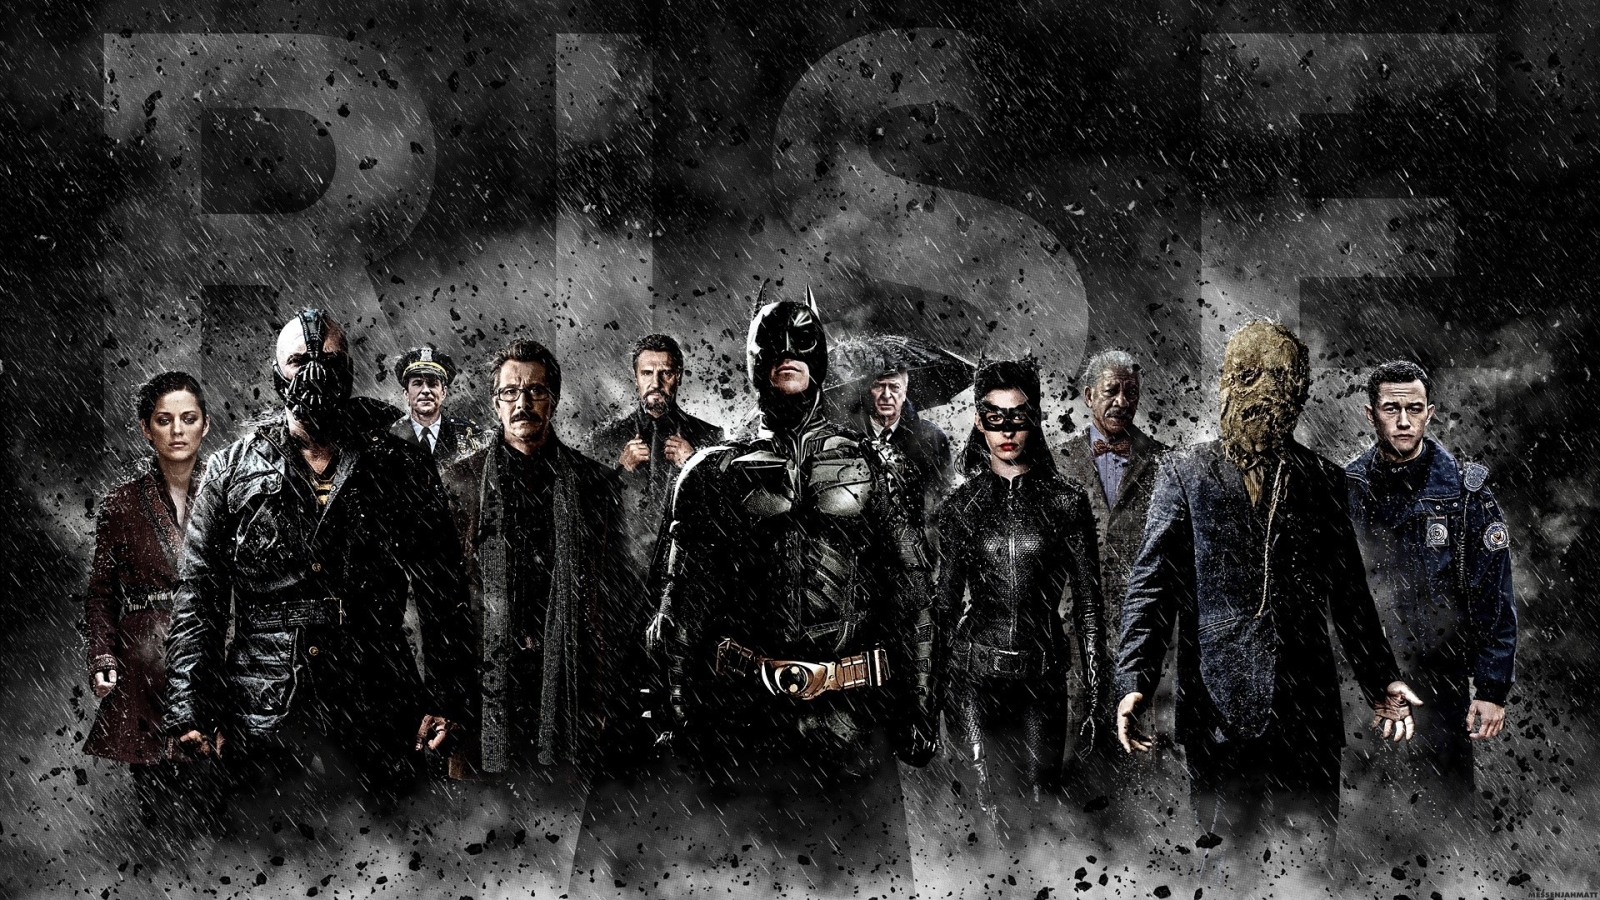 The Dark Knight Rises Cast for 1600 x 900 HDTV resolution